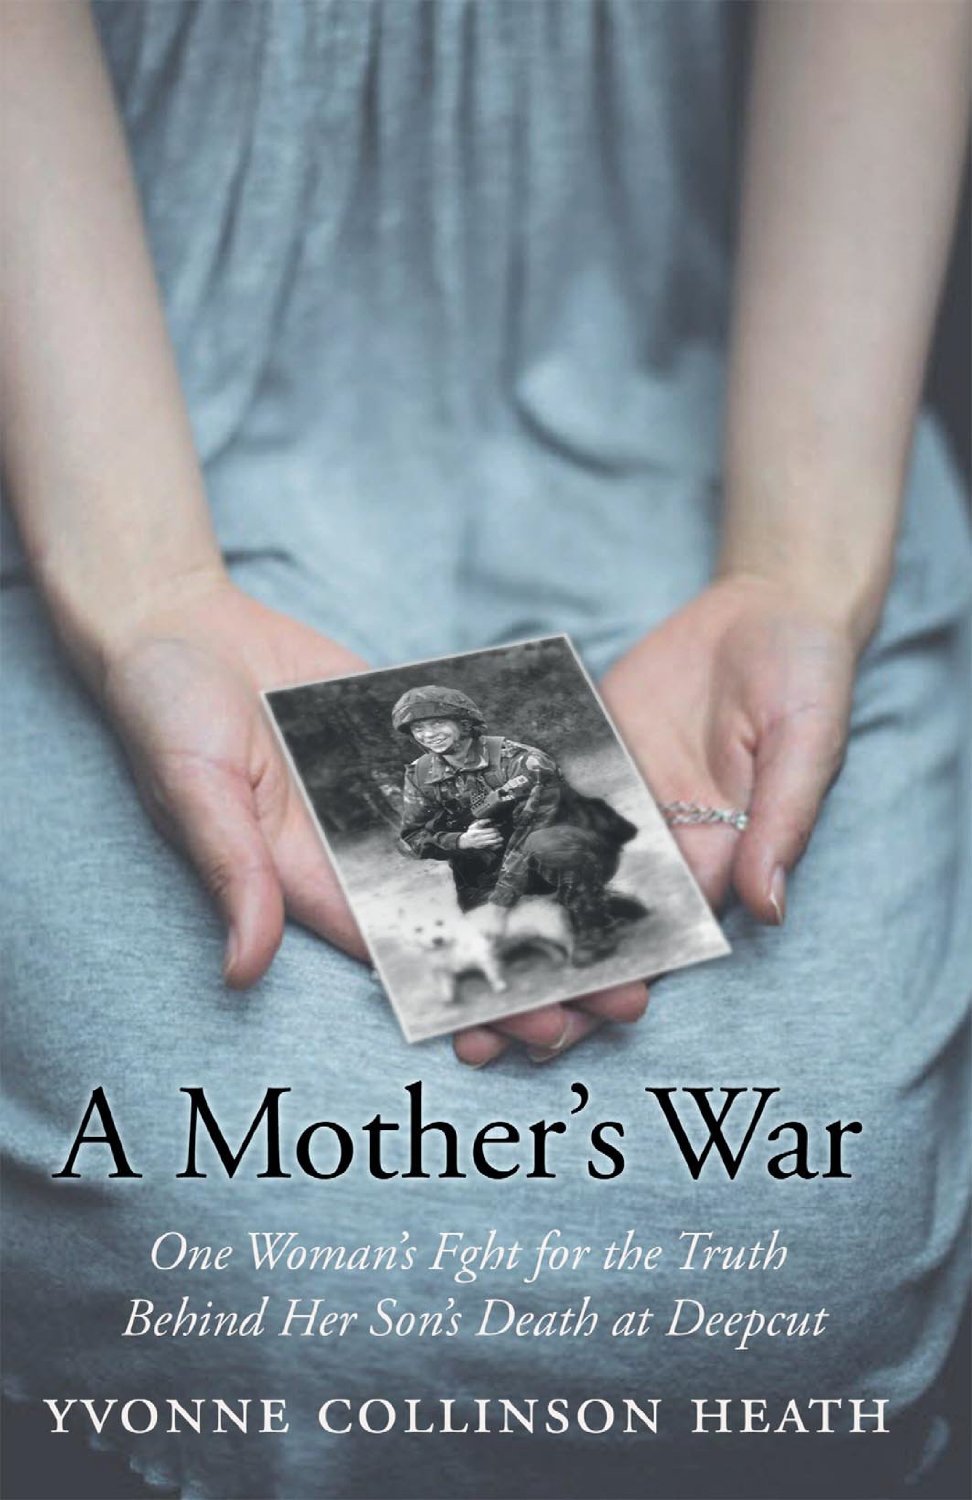 A Mother's War - Yvonne Collinson Heath.jpg